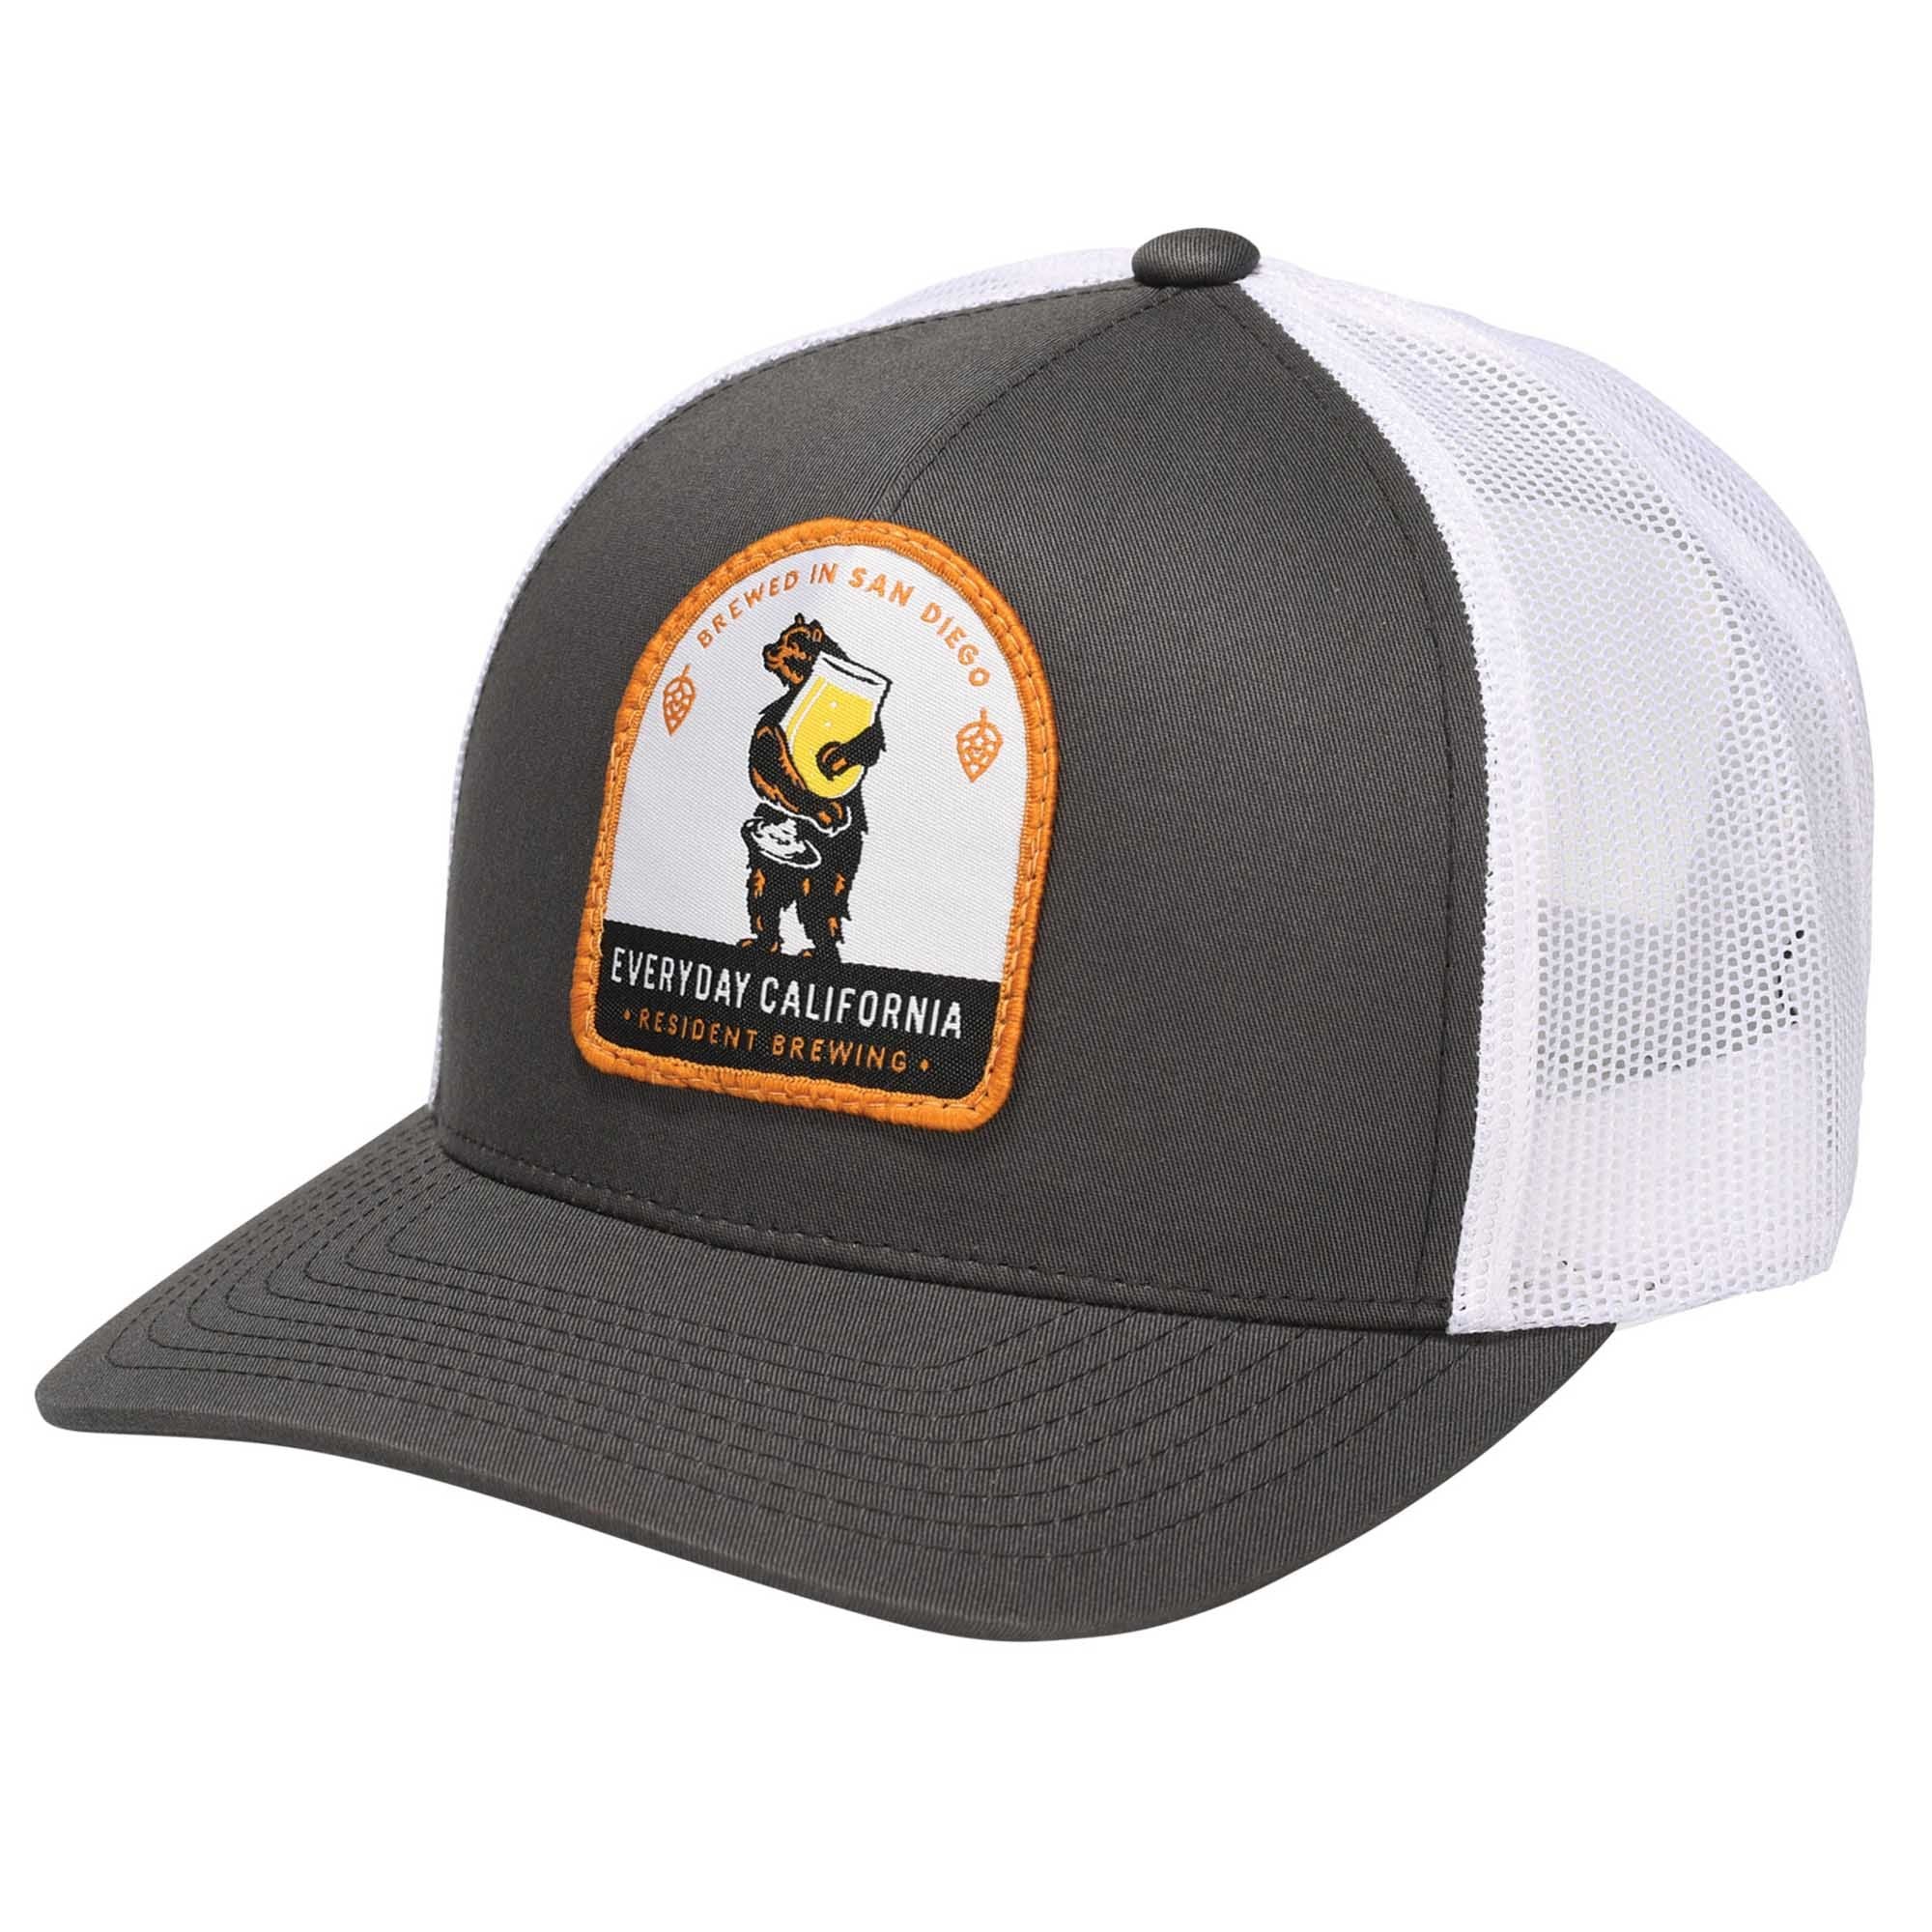 Everyday California Brewski Trucker Hat in Charcoal